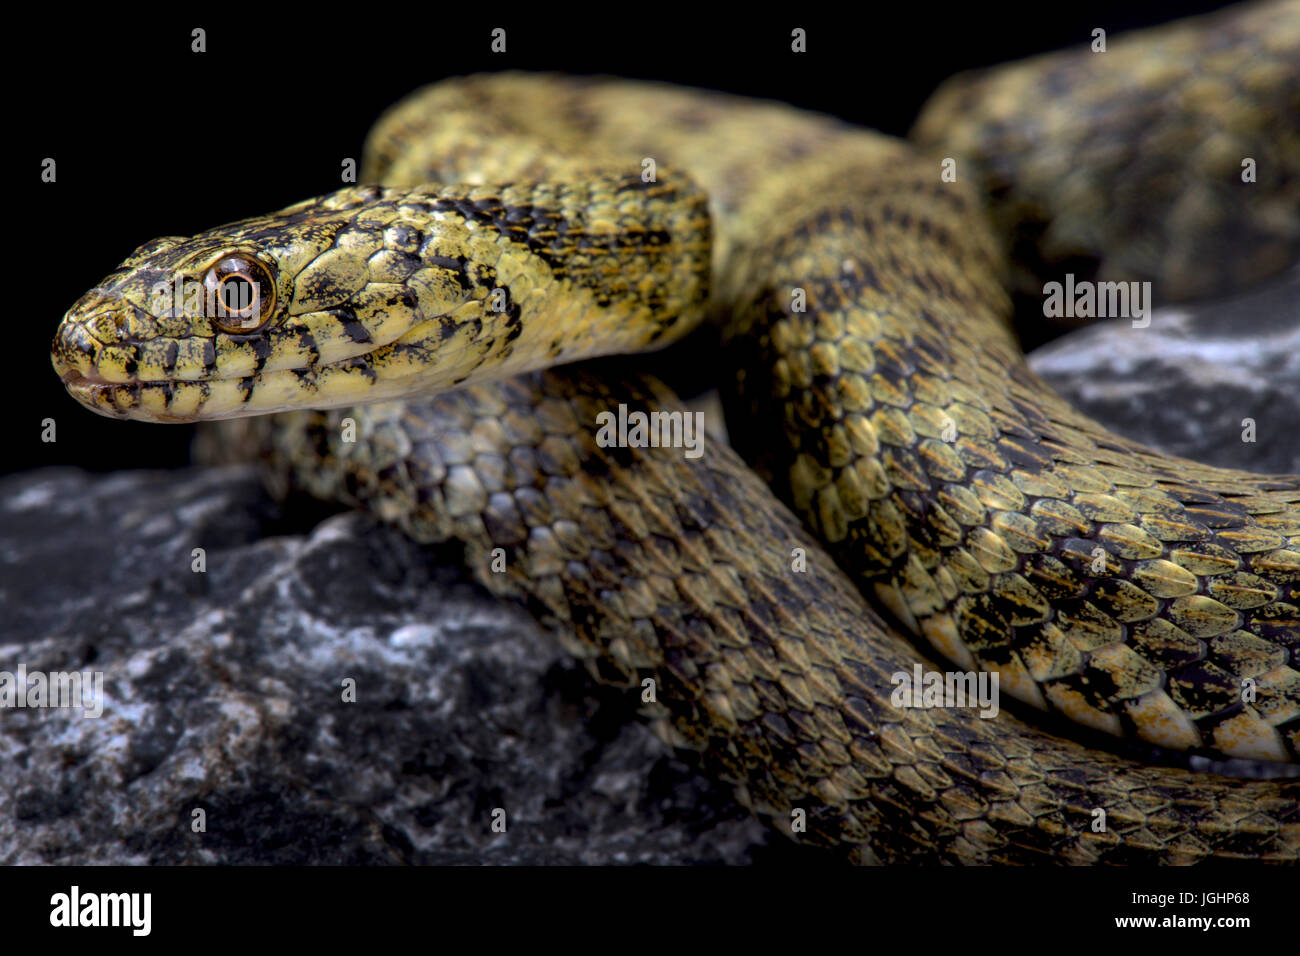 Dice snake, Natrix tessellata Stock Photo